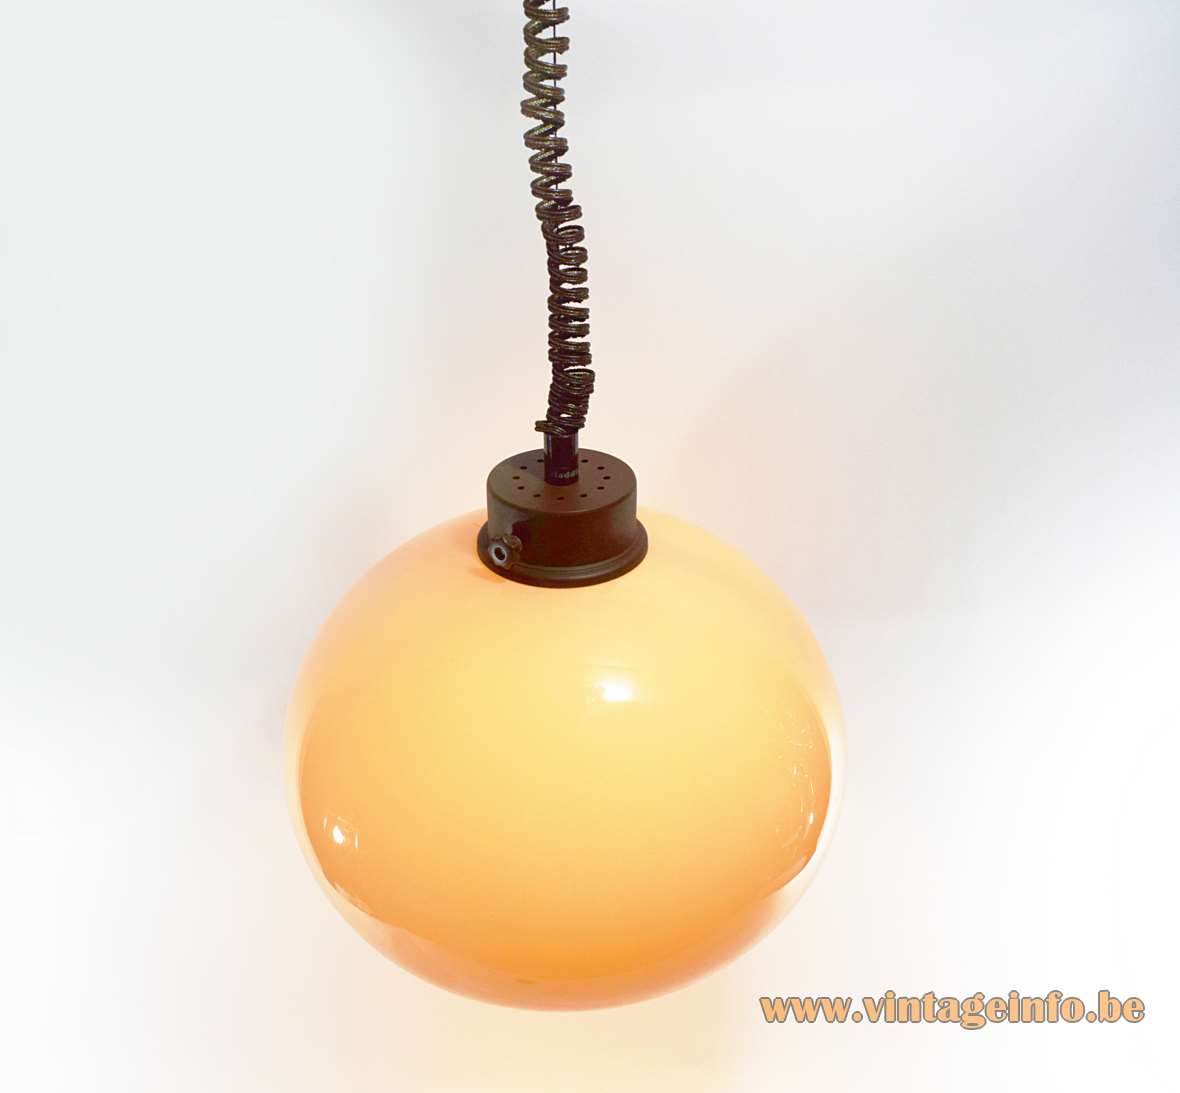 Dijkstra Aladdin pendant lamp big brown acrylic globe lampshade built-in dimmer rise & fall mechanism handle 1970s